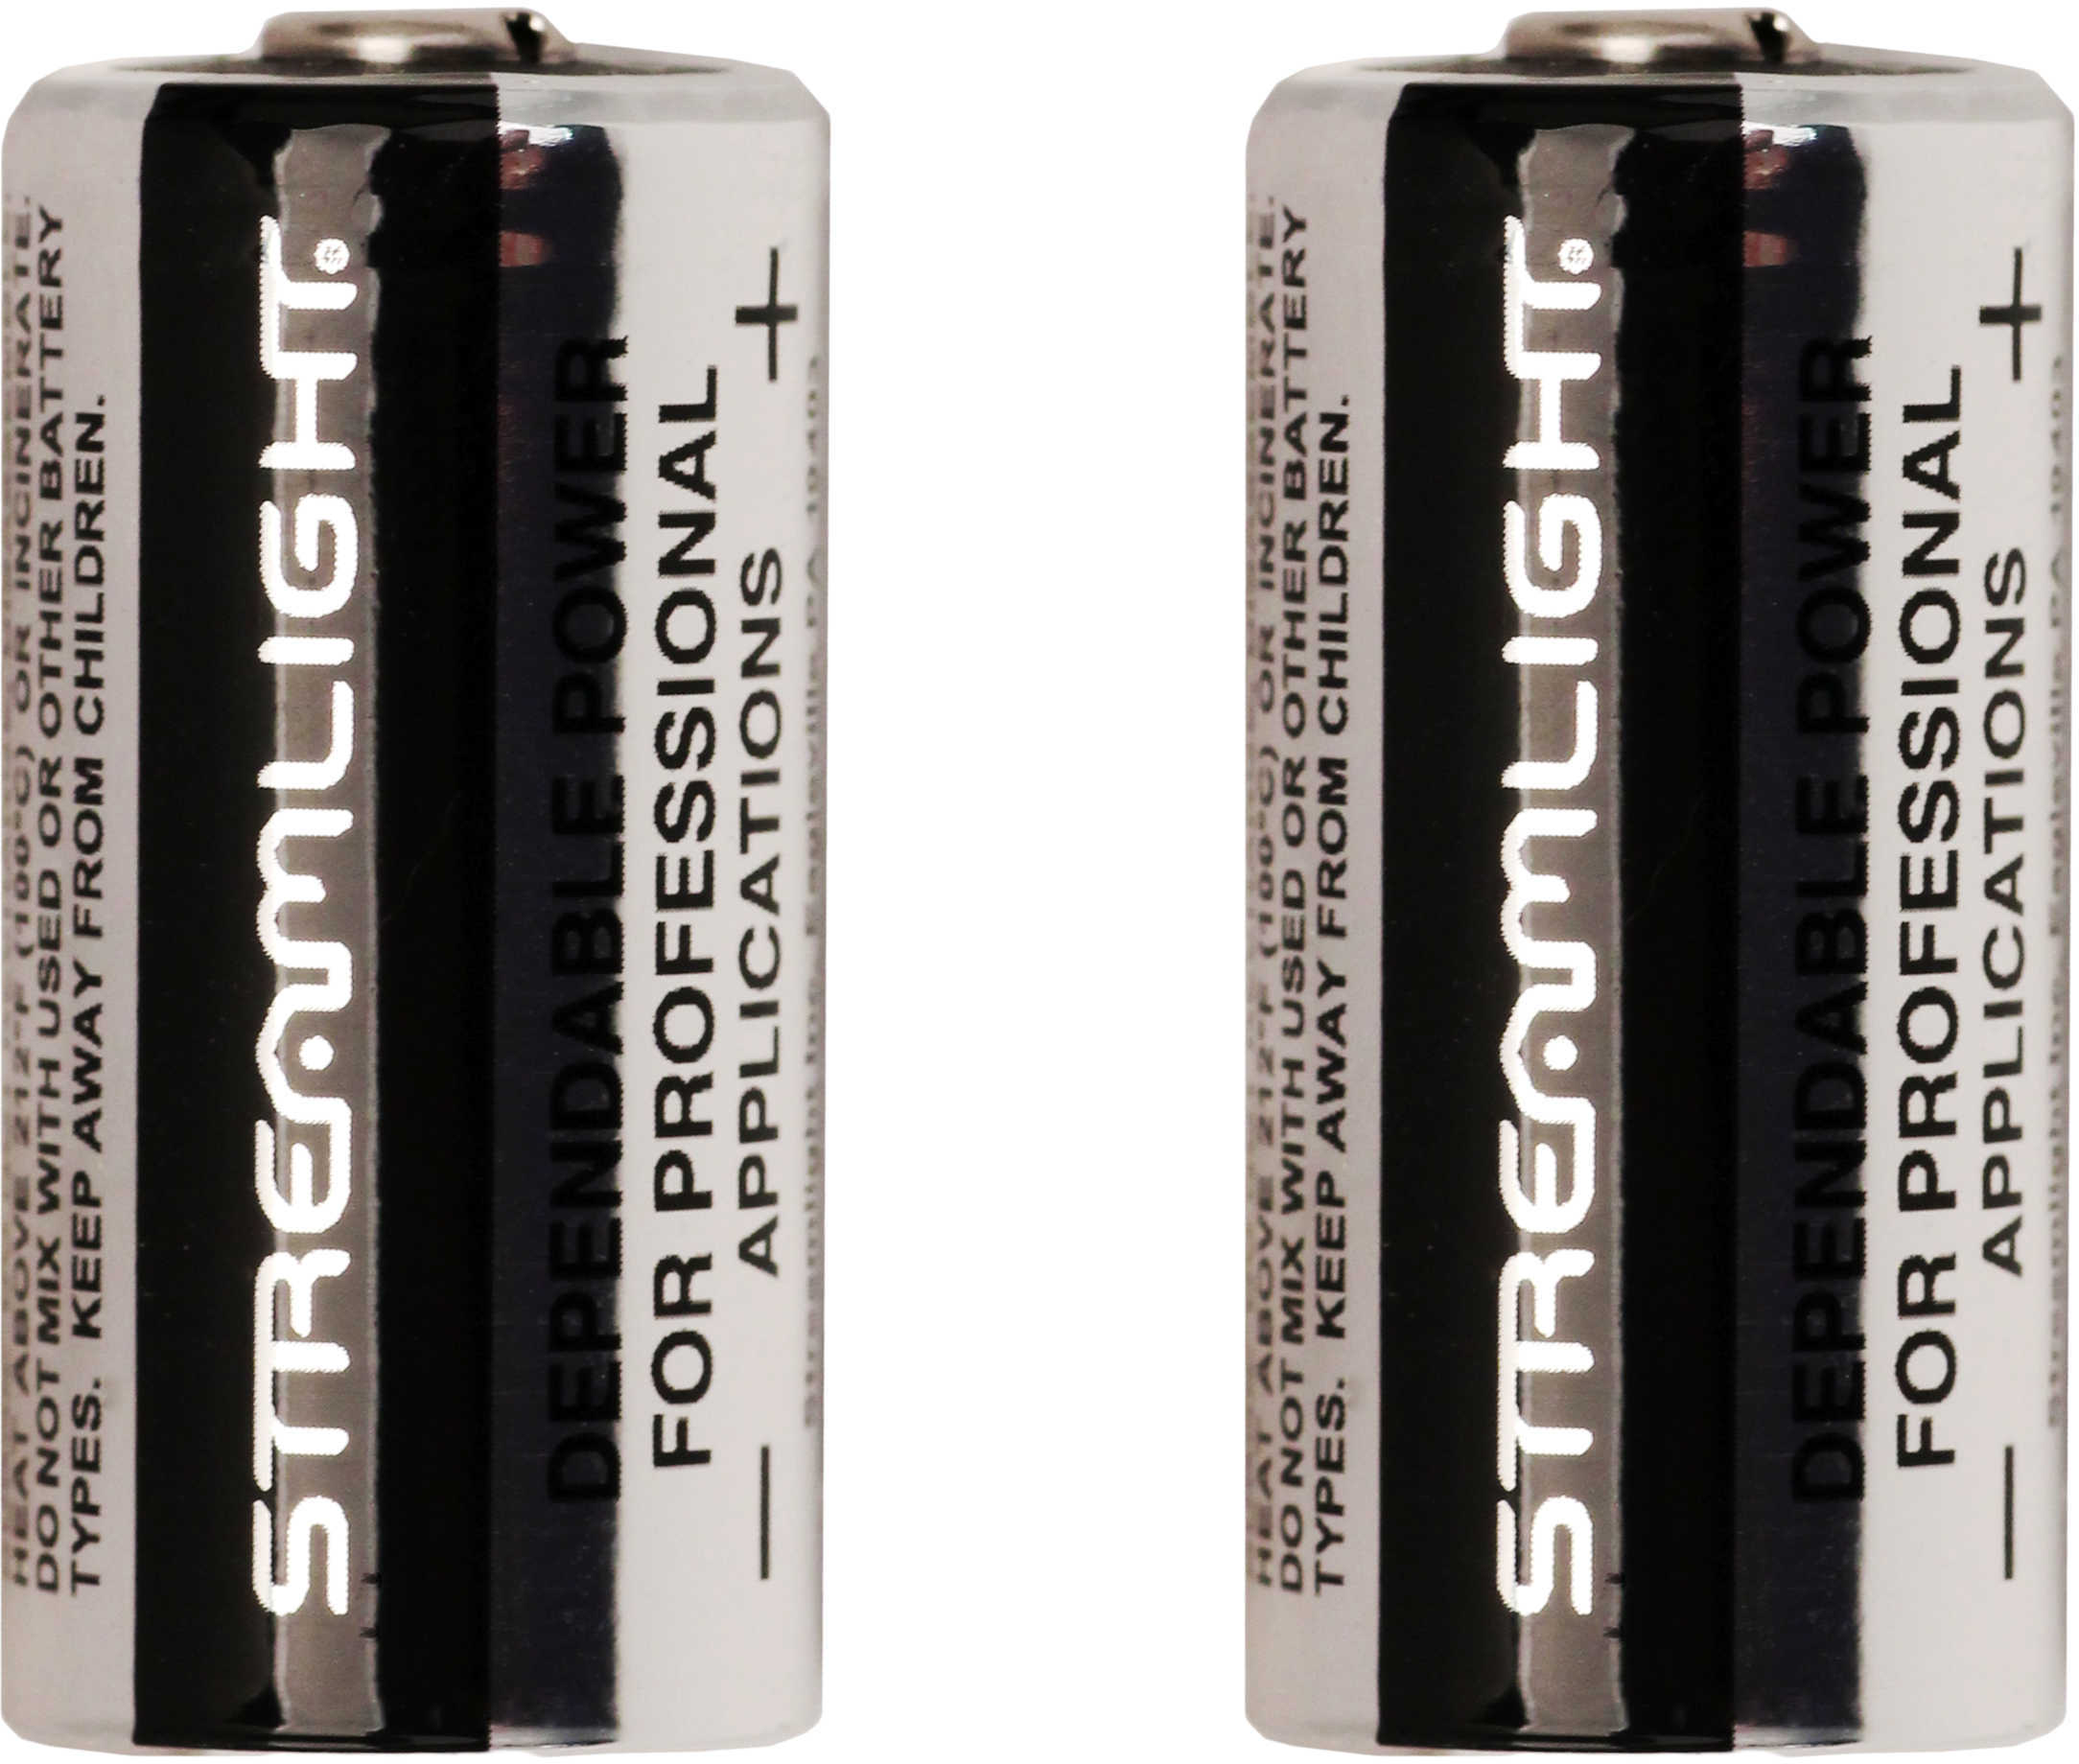 Streamlight 3V Lithium Battery 2/Pack Not Available 85175